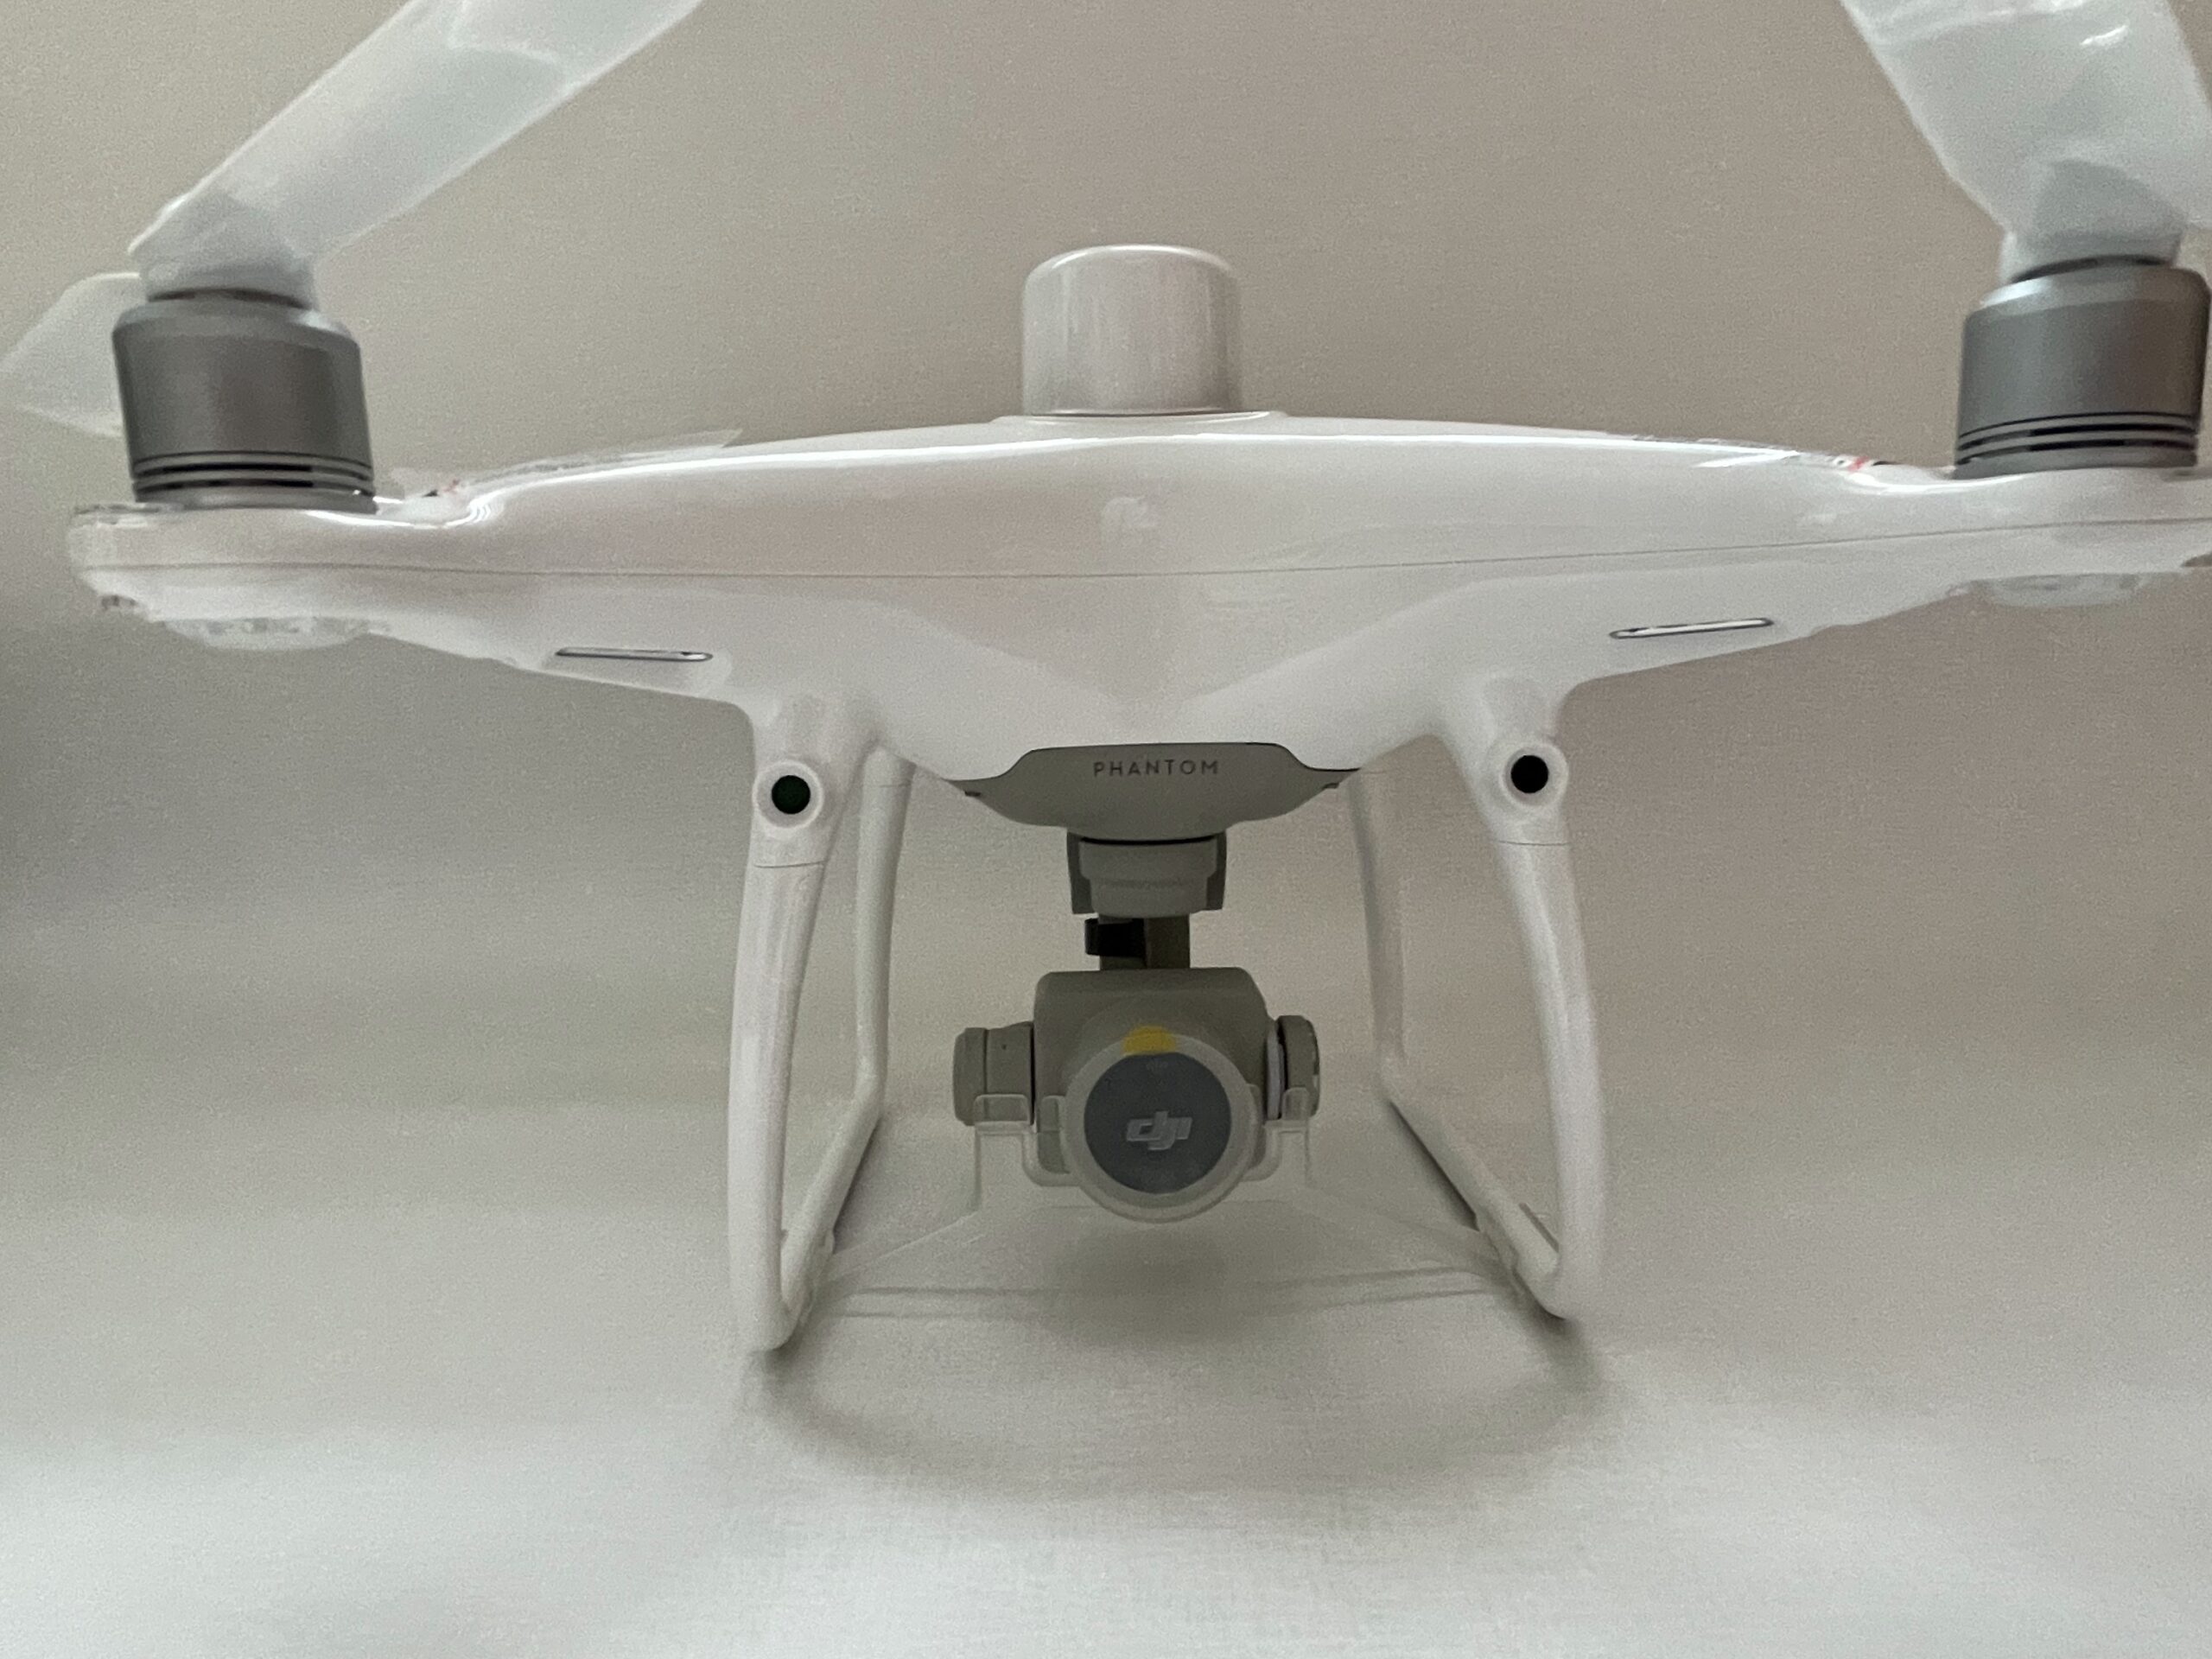 DJI Phantom 4 RTK - Used drone - Drone Parts